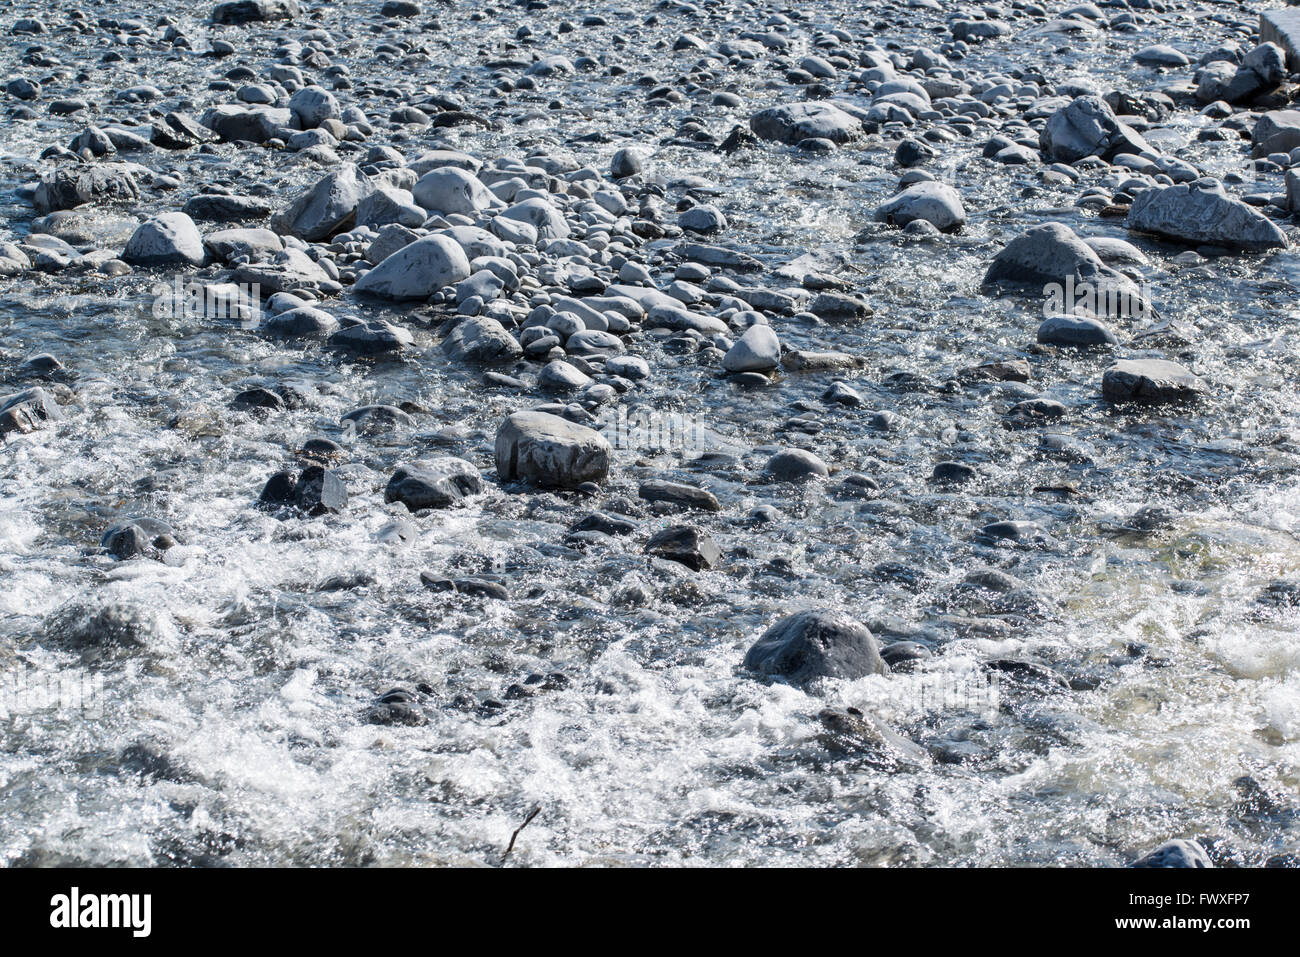 River flowing across a pebble beach. Stock Photo